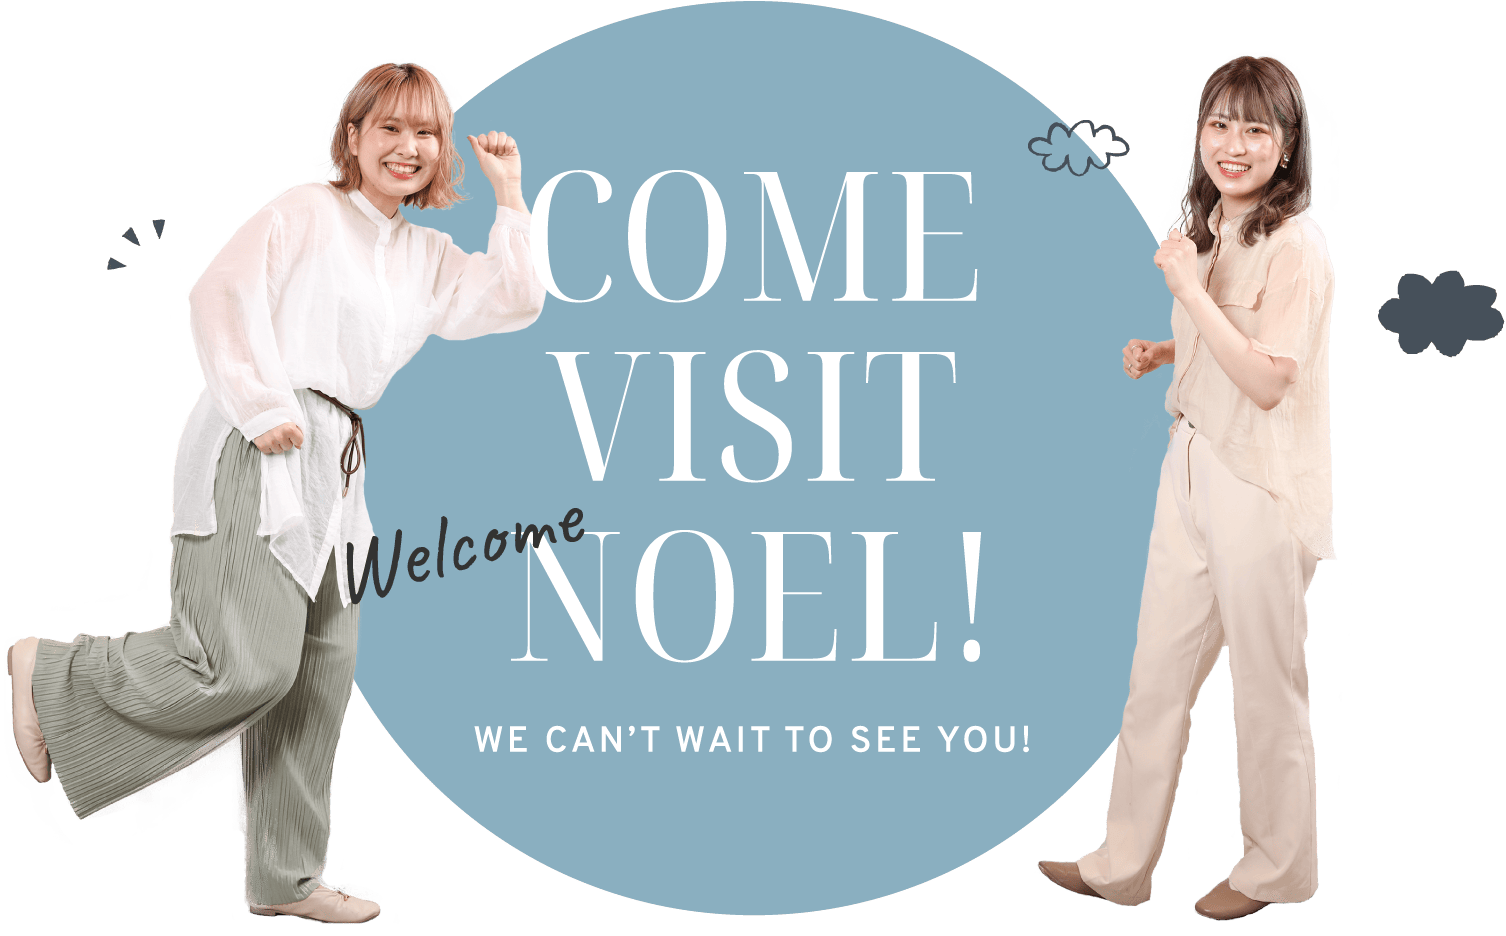 COME VISIT NOEL!